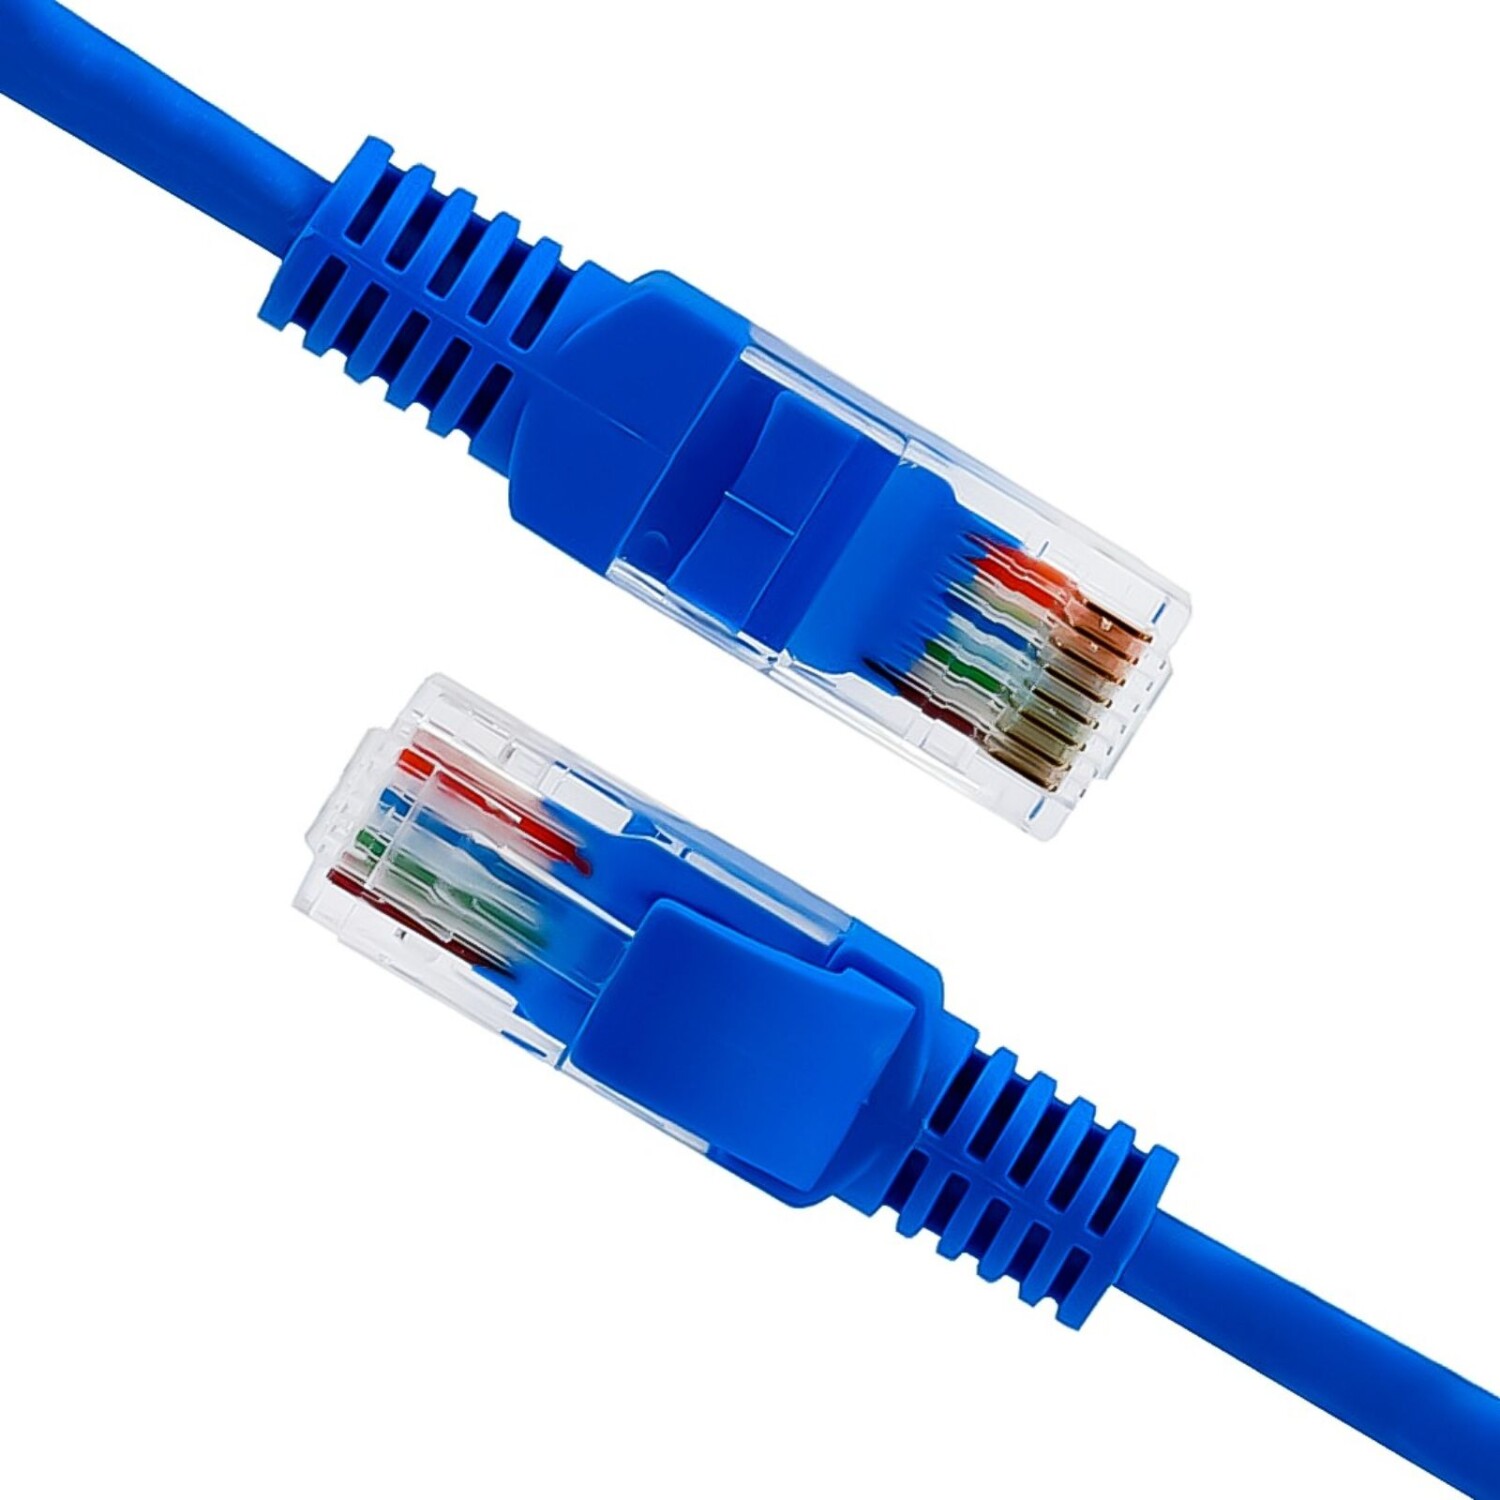 Cables de red Ethernet RJ45 de 20 metros - Cables y accesorios RJ45